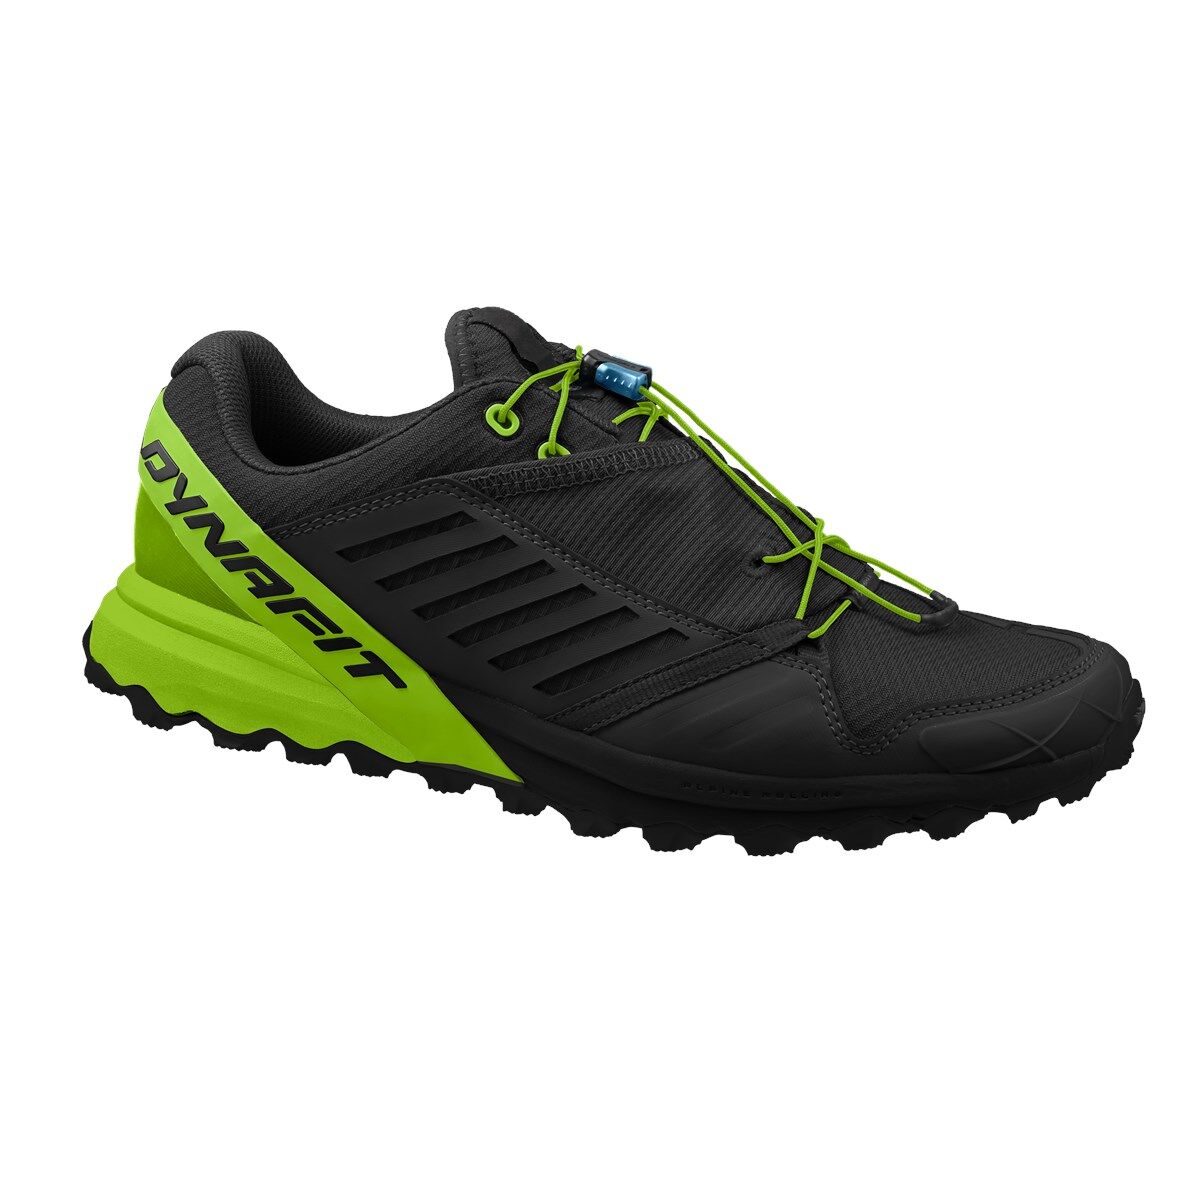 Dynafit - Alpine Pro - Trail Running shoes - Men's